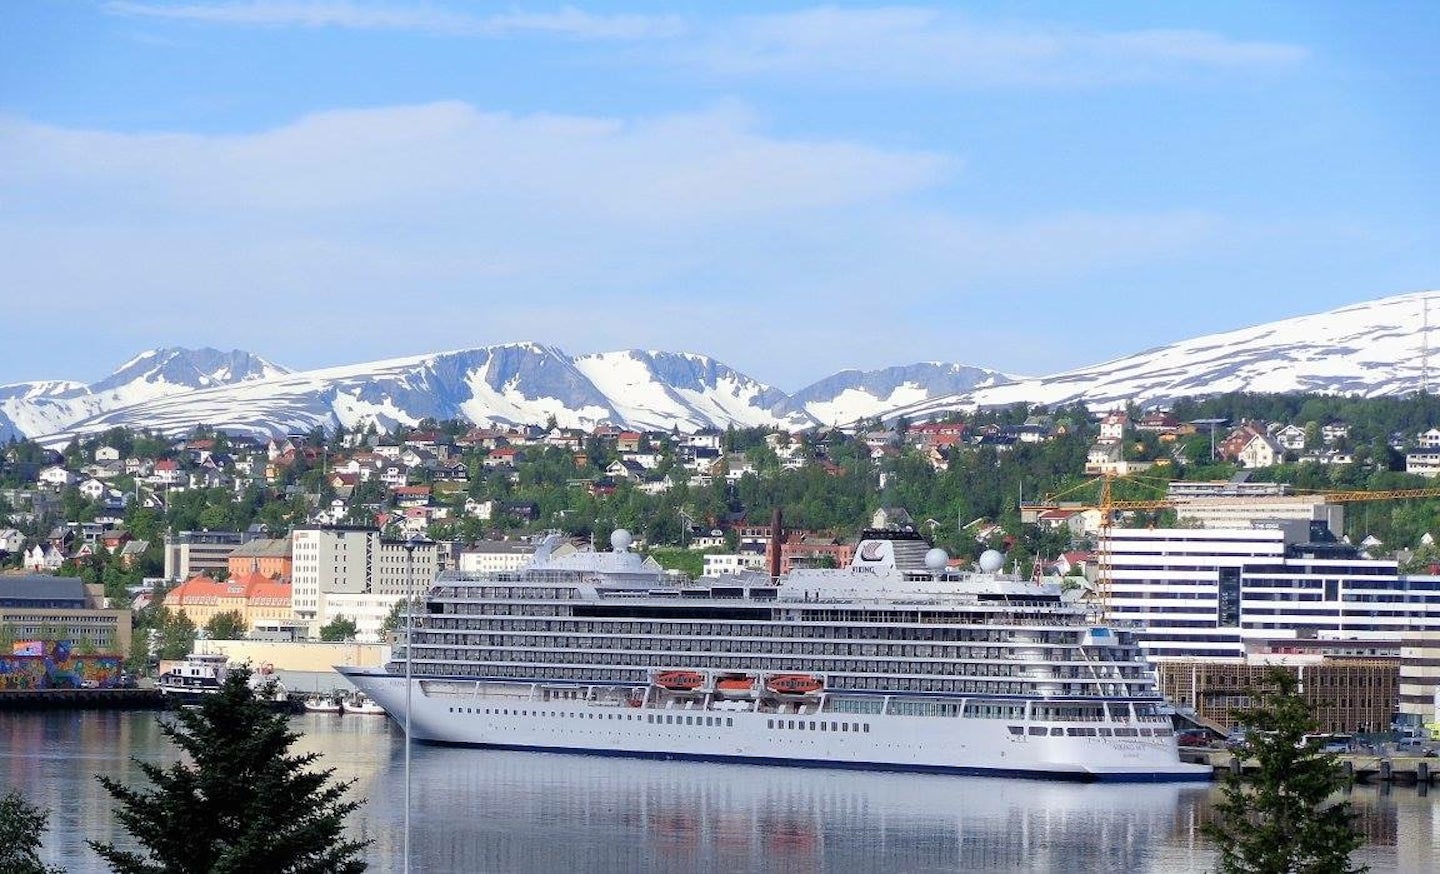 The Viking Sky in Bergen, Norway